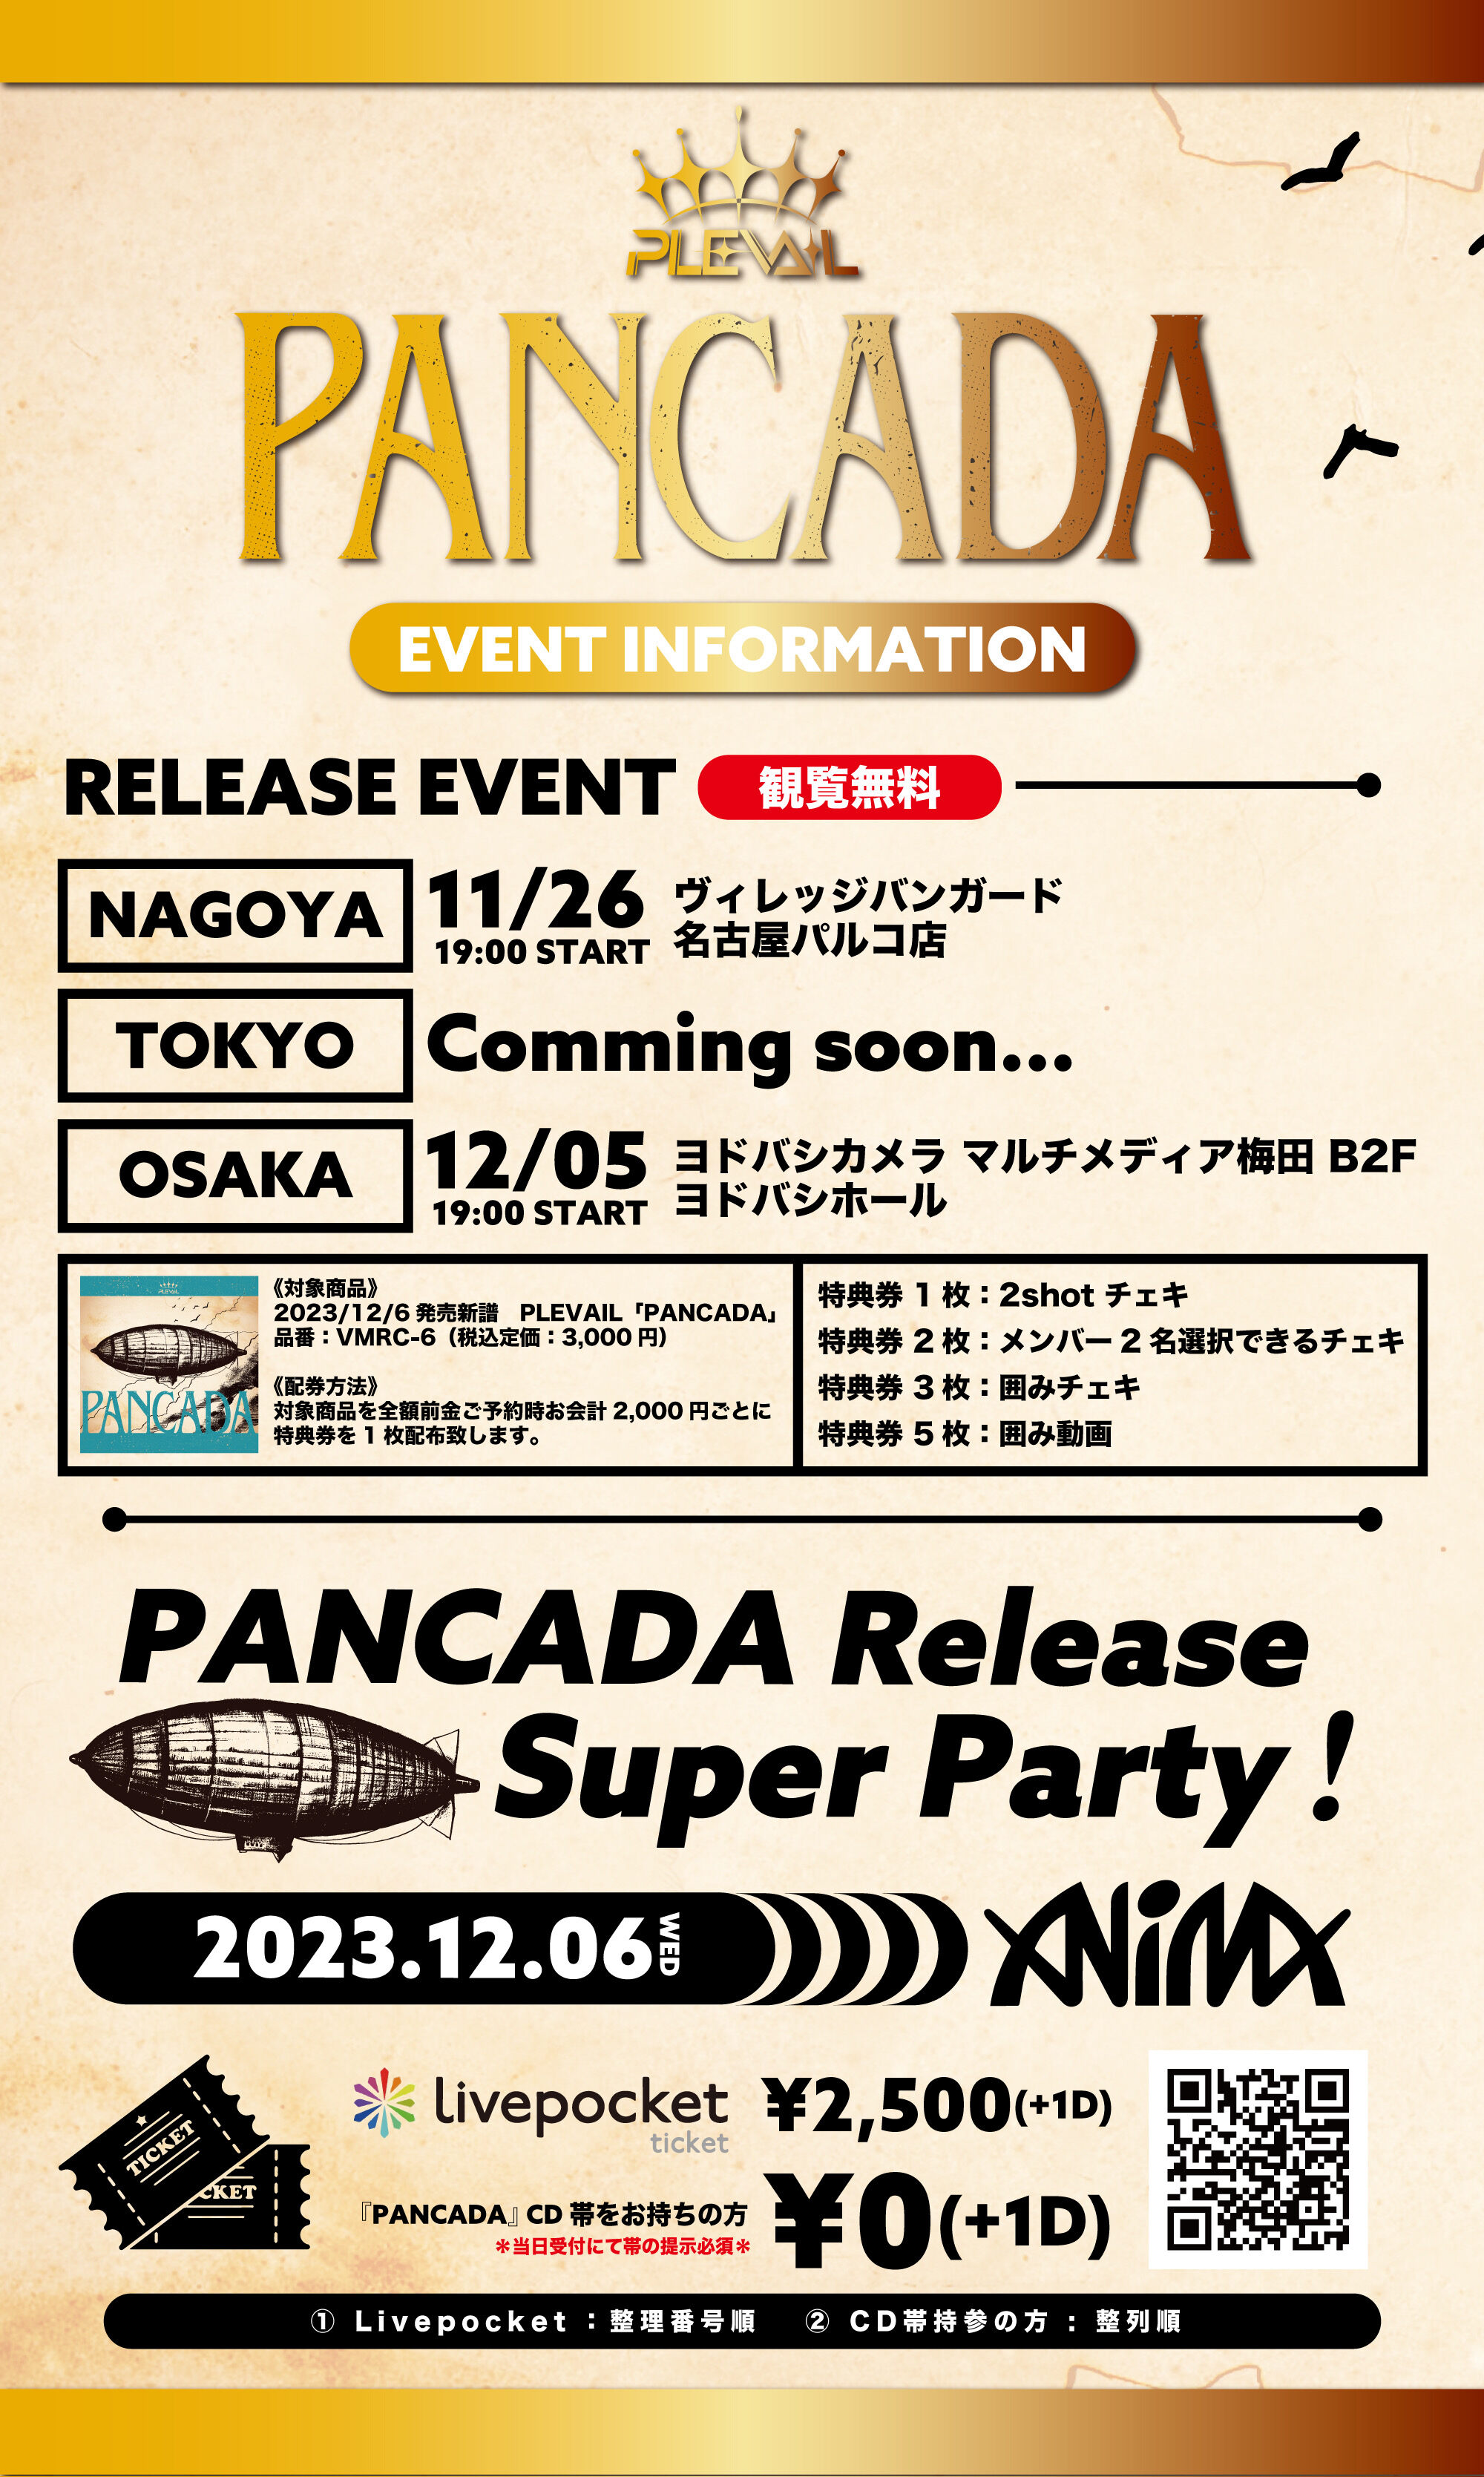 PANCADA Release Super Party！